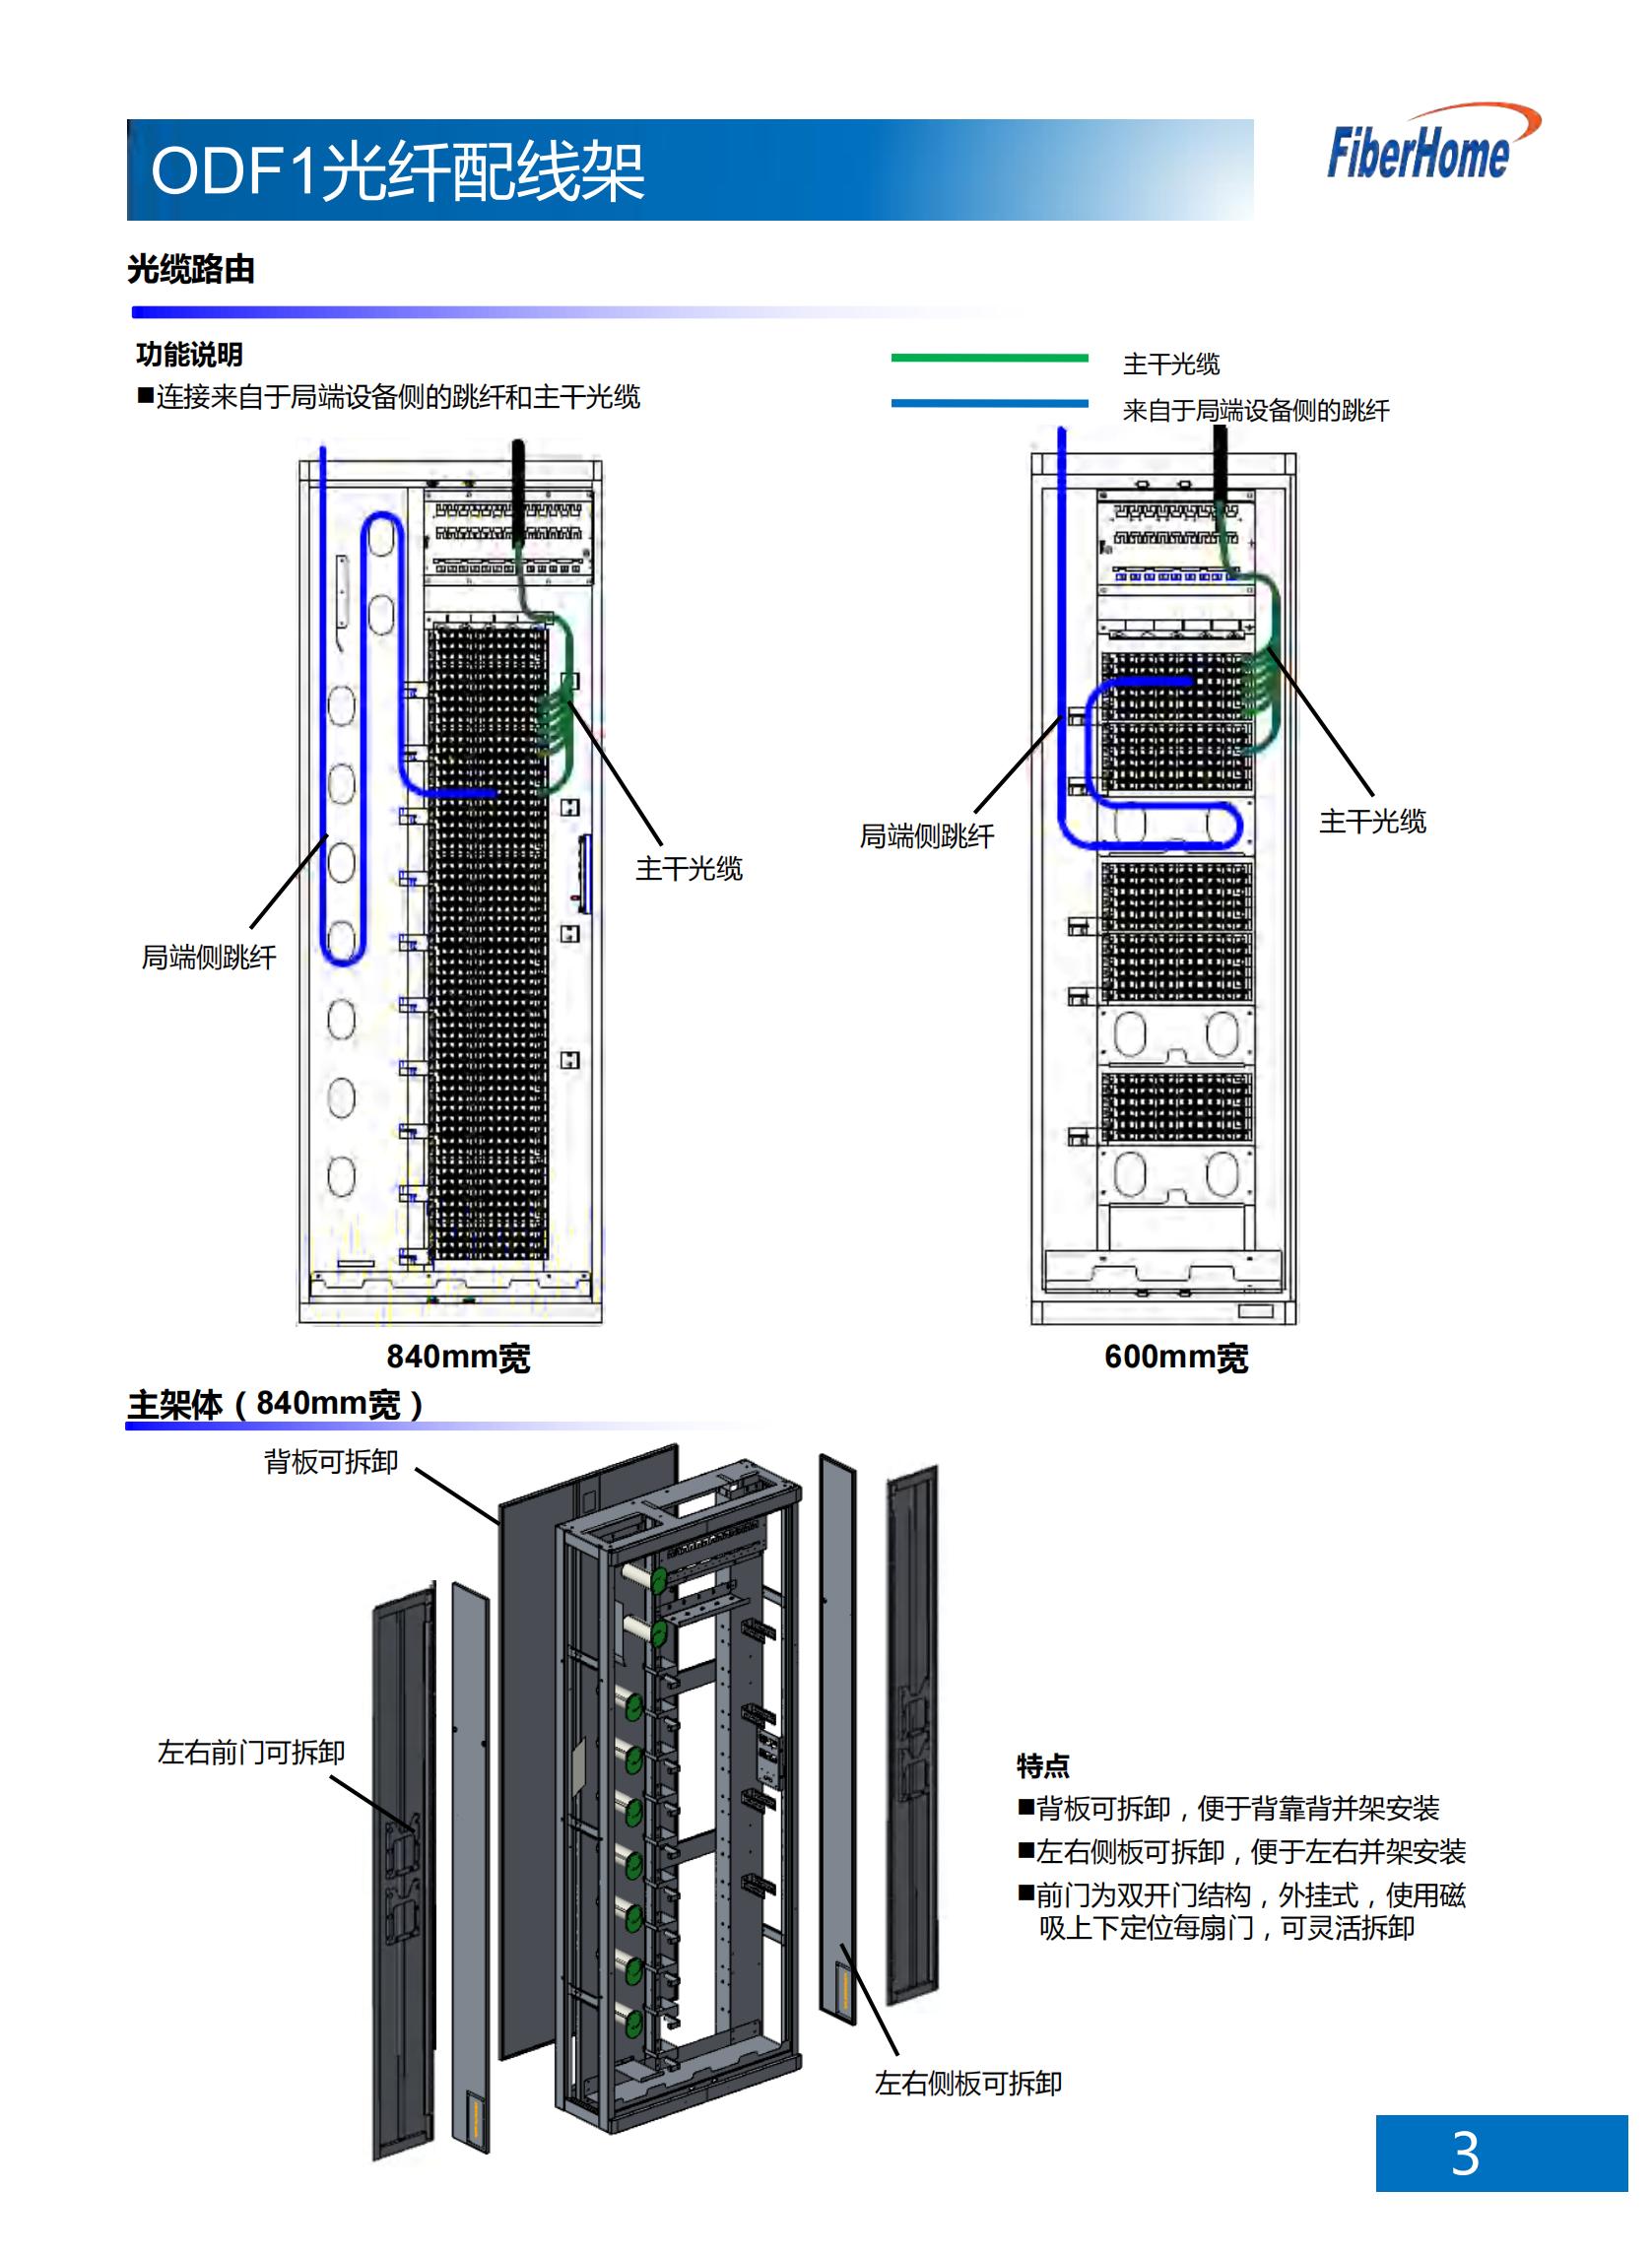 ODF101-576-A4-FC ODF optical fiber distribution frame (576-core floor-standing all include 12-core FC fusion integration unit) with fiber storage unit)